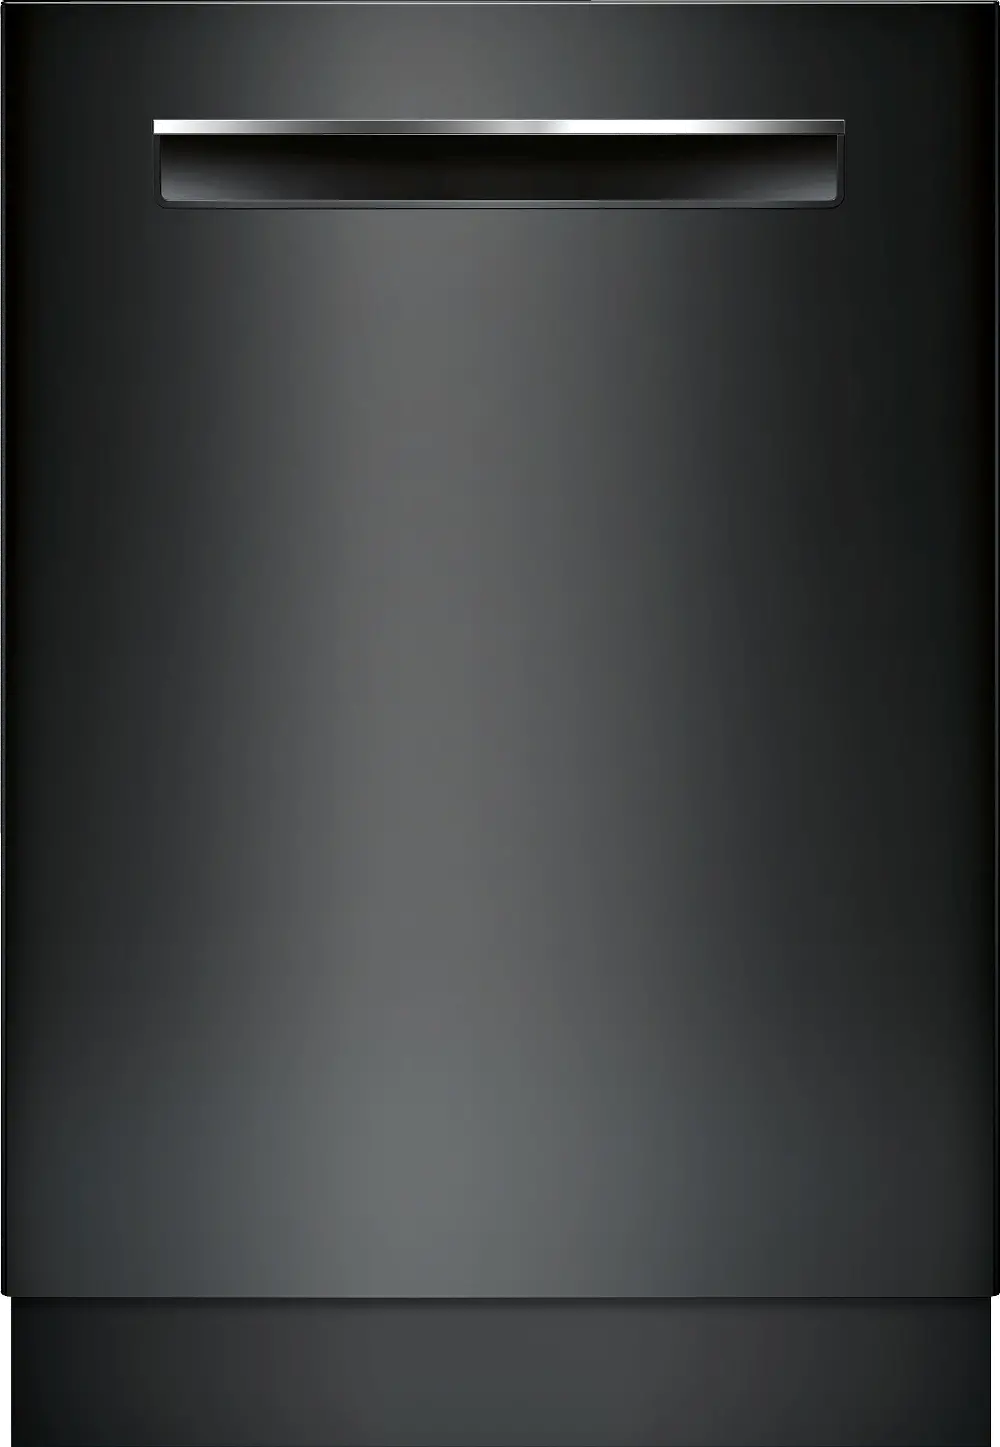 SHP878ZD6N Bosch 800 Series Dishwasher with CrystalDry - Black-1